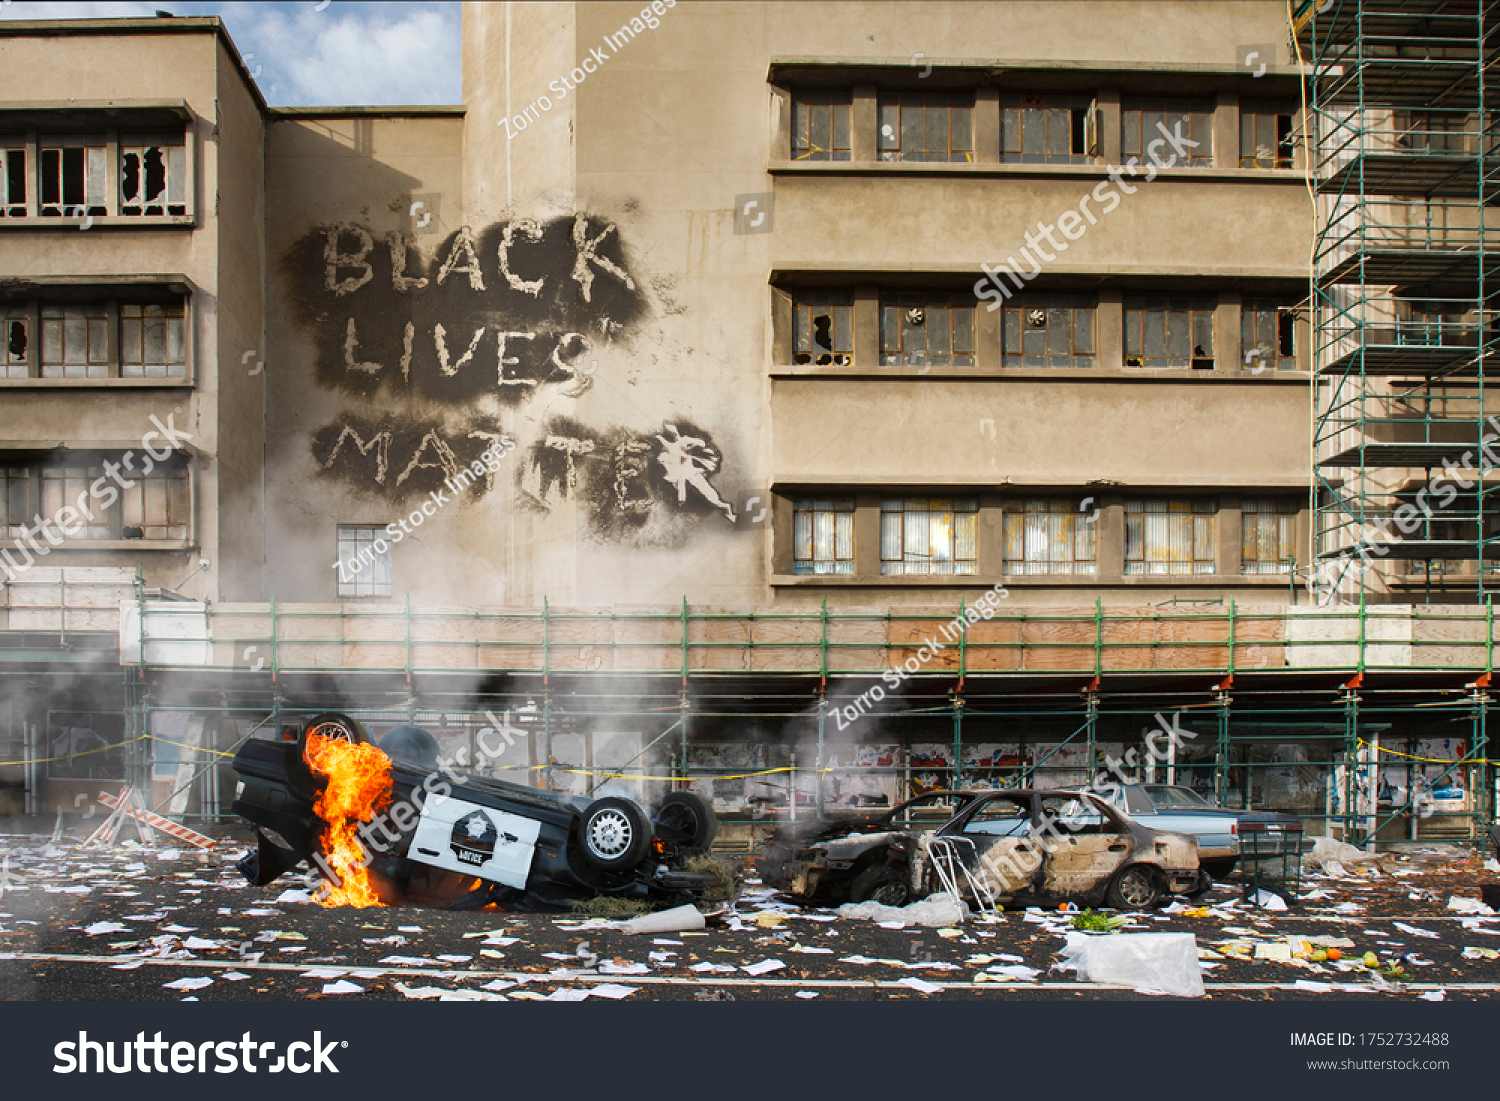 Black Lives Matter protest riot vandalism, looting aftermath concept, flaming police car smashed, overturned with black lives matter text slogan message on building. Excessive force, police brutality #1752732488